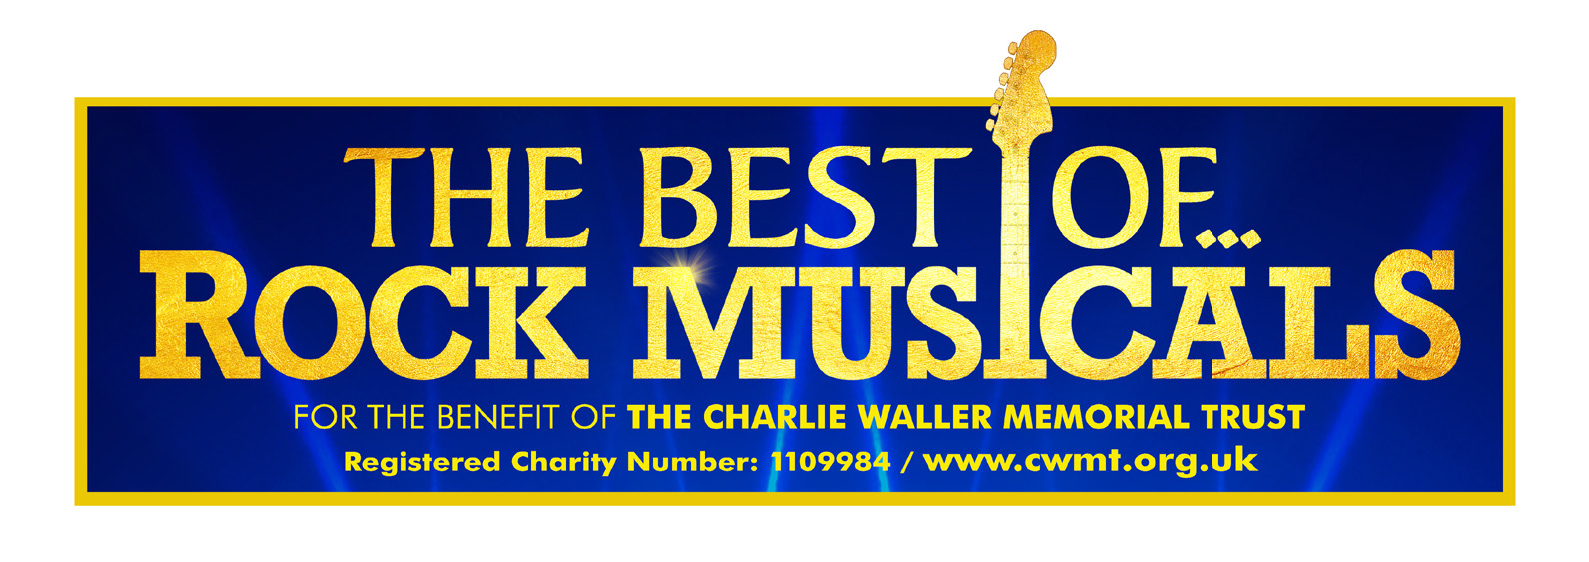 The Best of... Rock Musicals official website